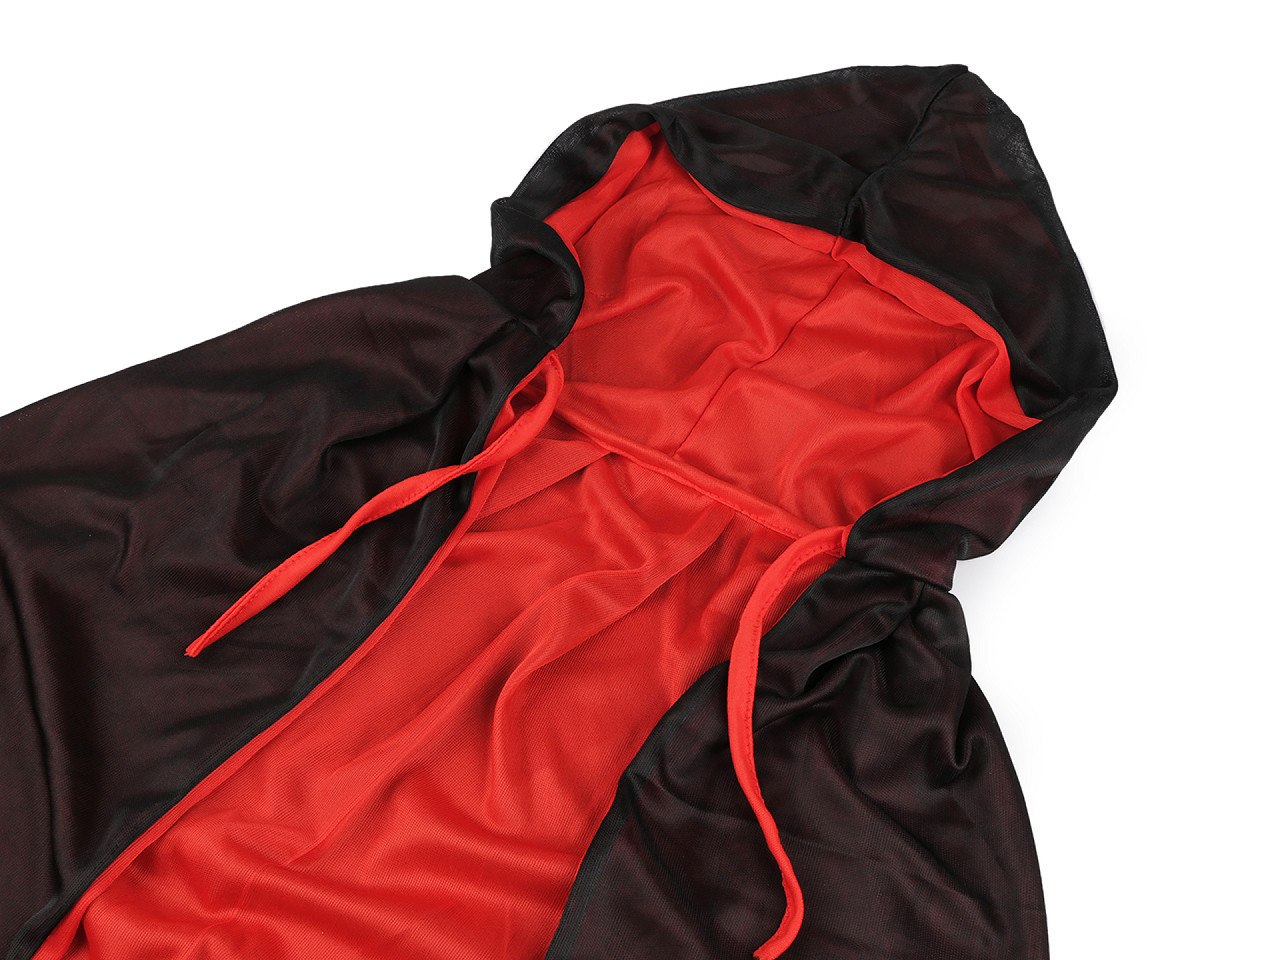 Karnevalový plášť s kapucí, barva 3 (90 cm) černá červená